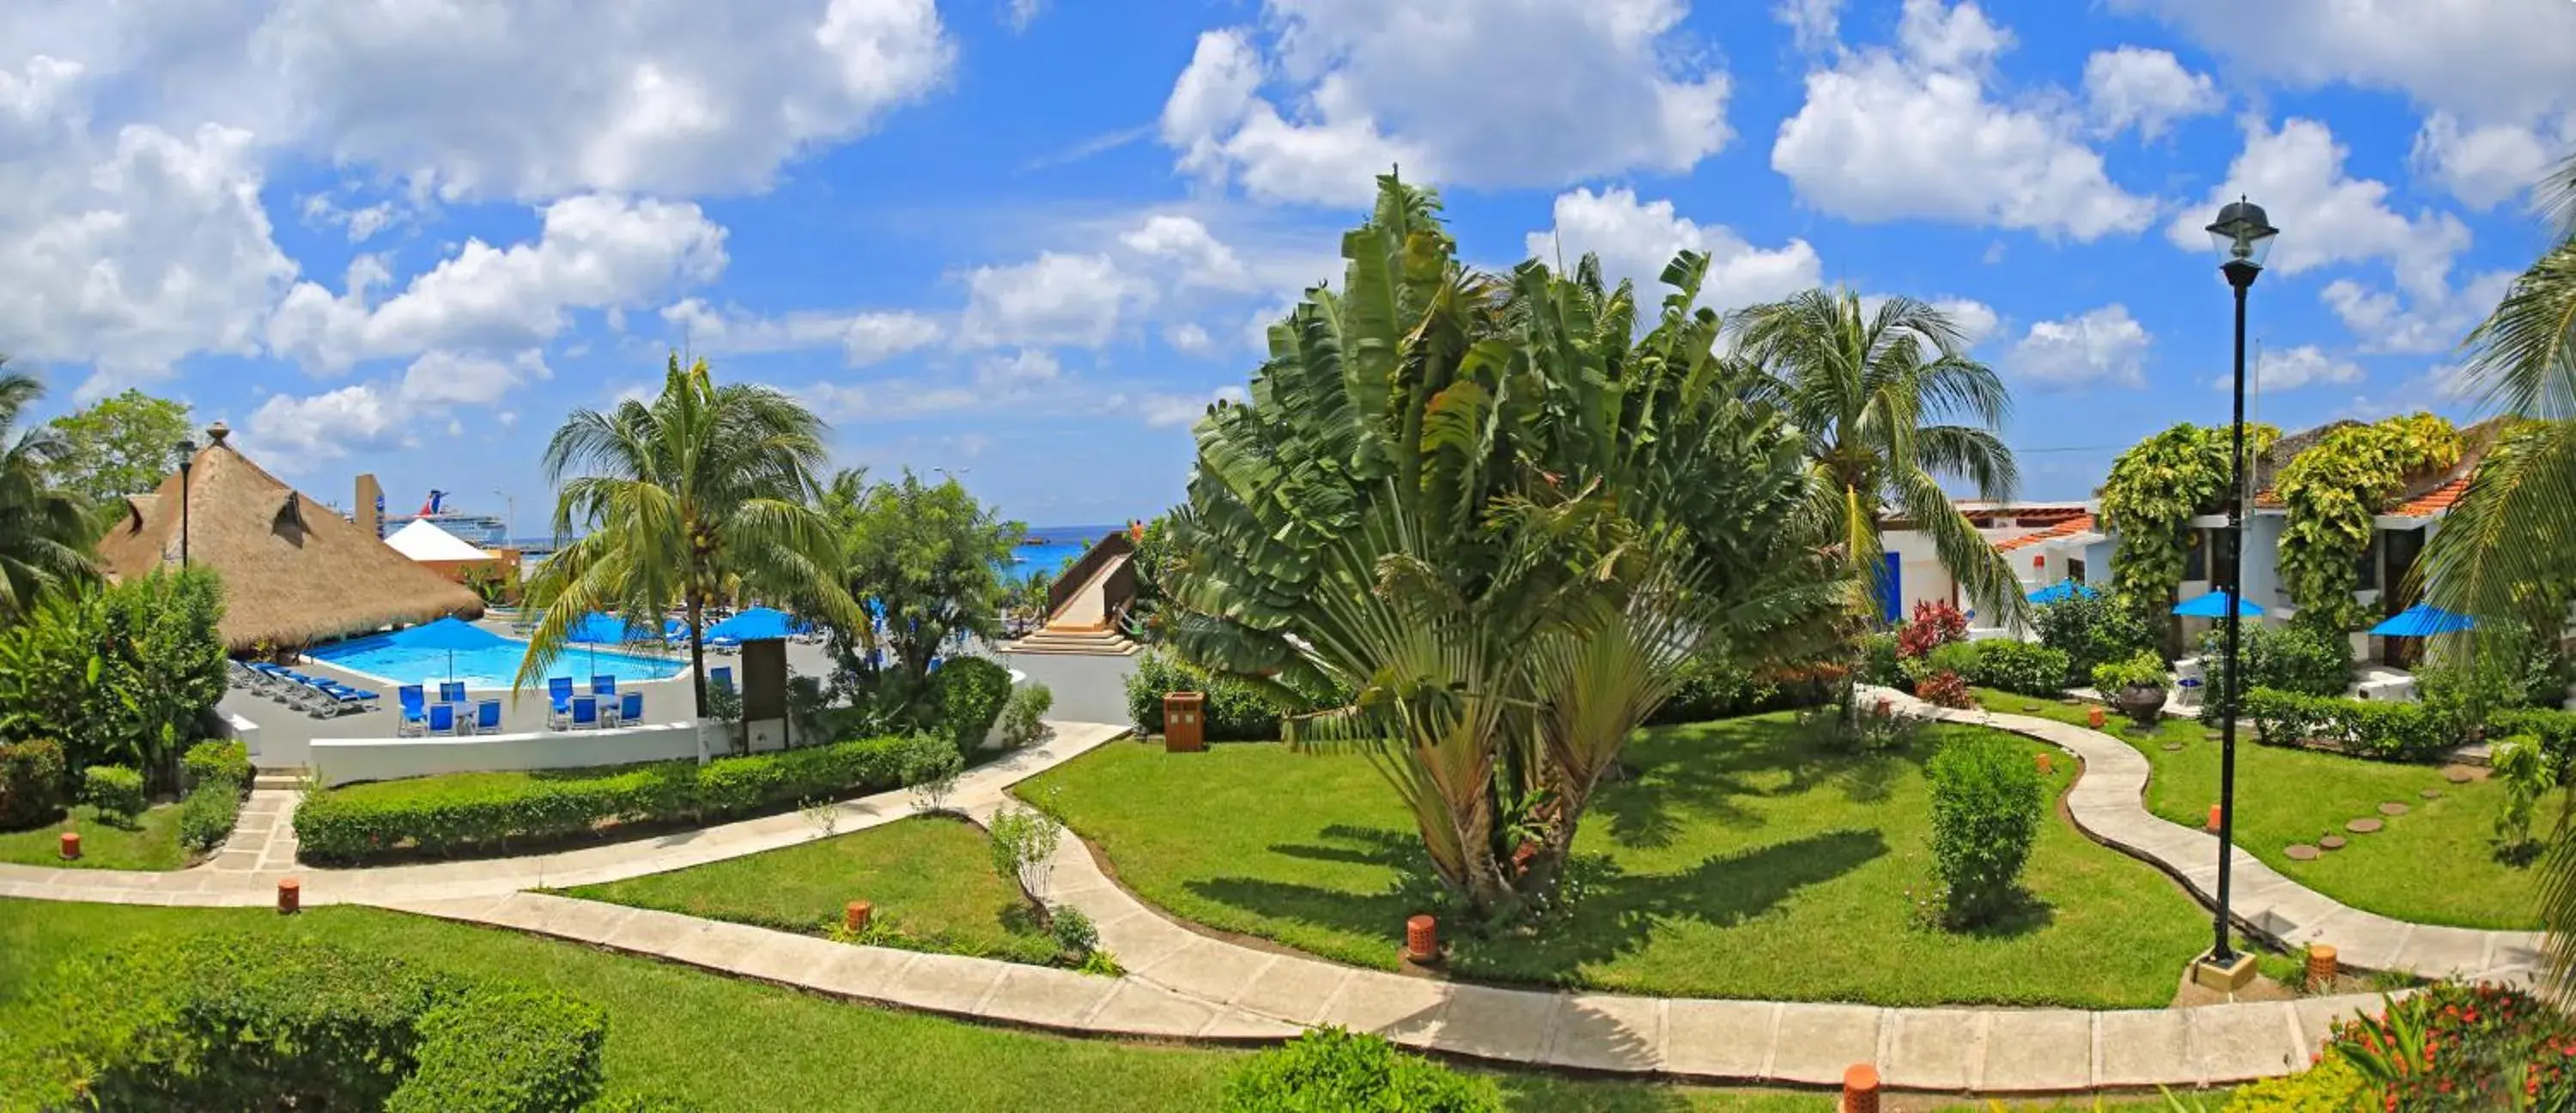 Natural landscape, Pool View in Casa del Mar Cozumel Hotel & Dive Resort